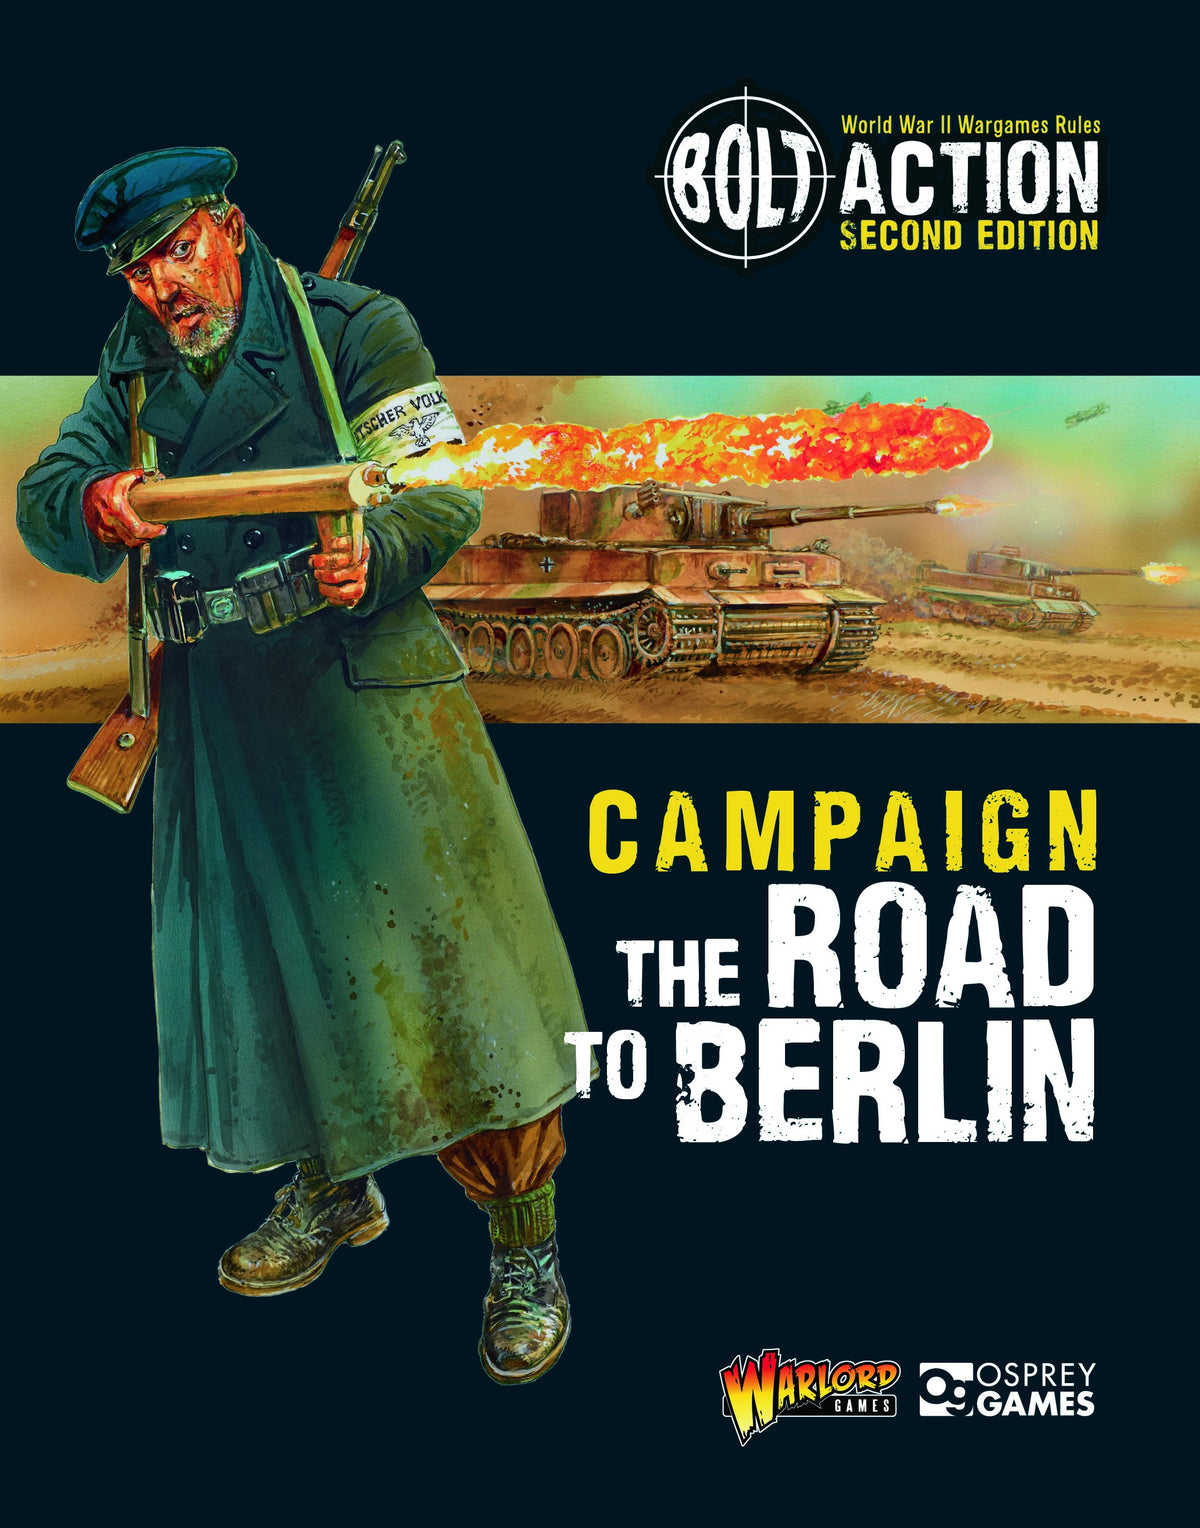 The Road to Berlin ebook